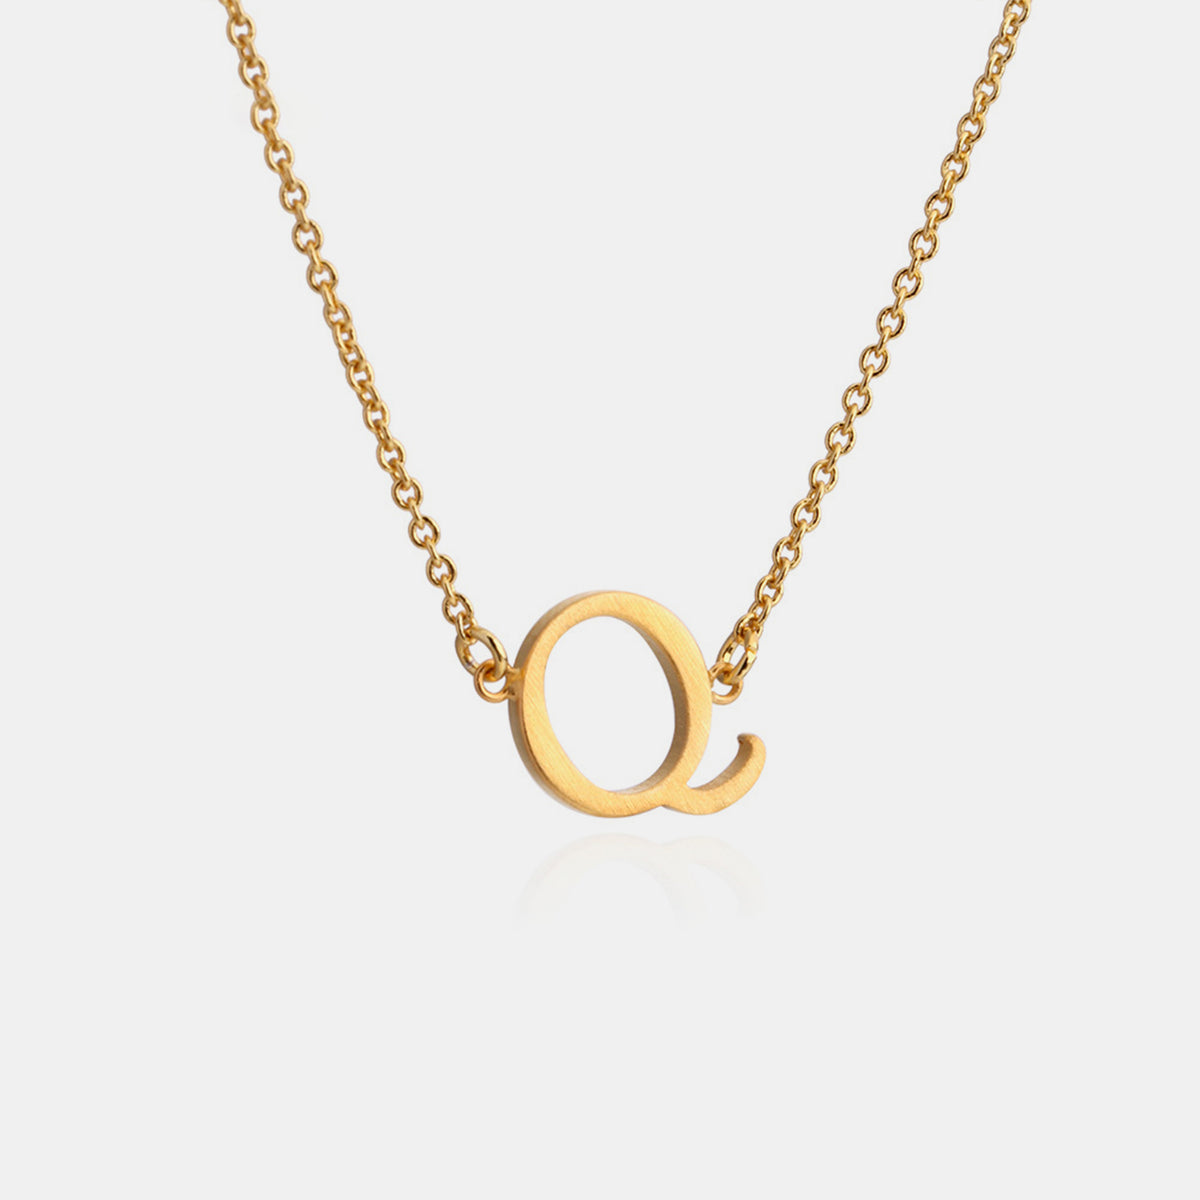 Q-V Copper Letter Pendant Necklace